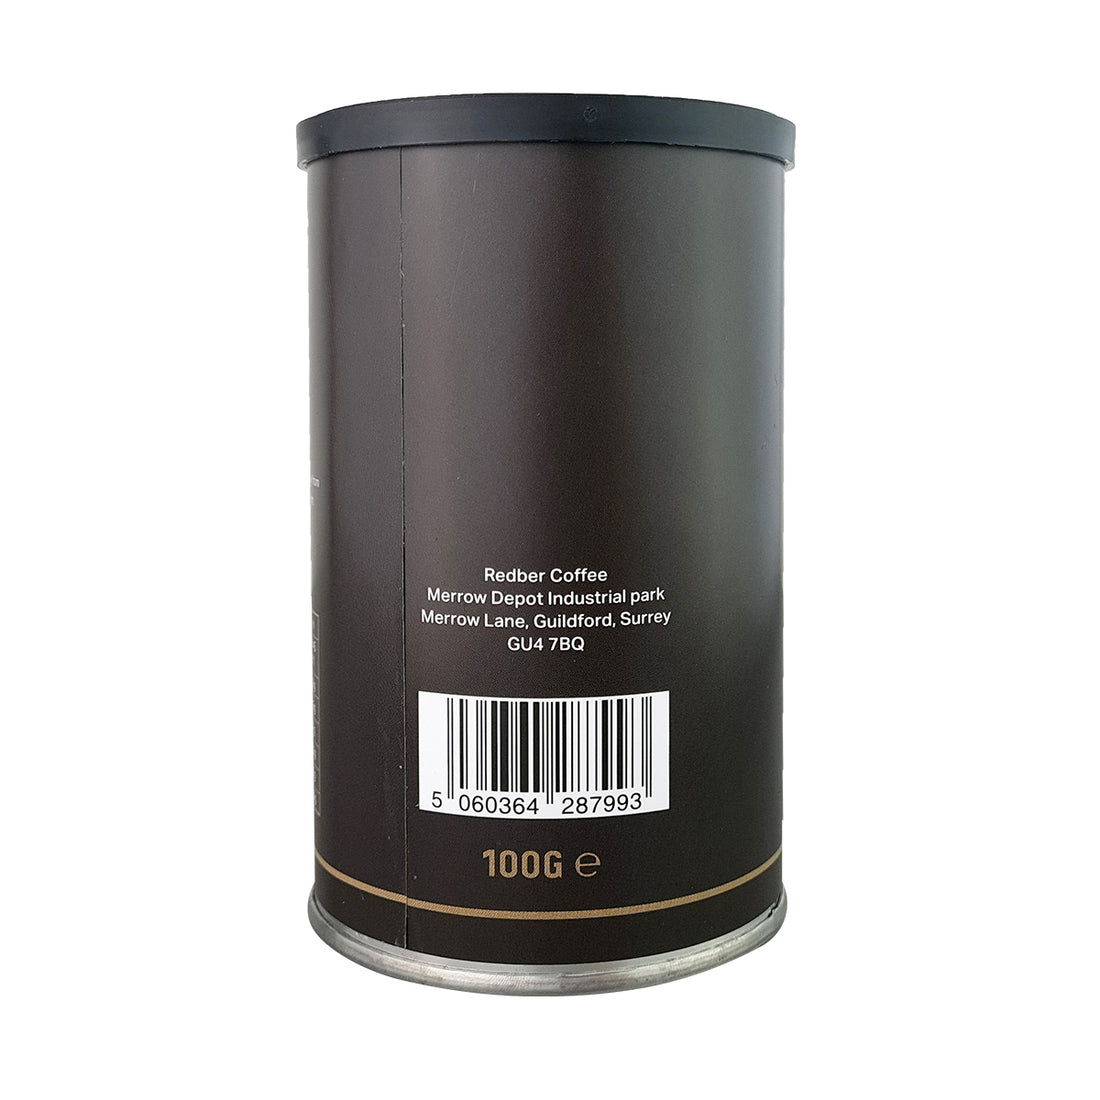 Redber, Redber 100% Colombian Instant Coffee Tin 100g, Redber Coffee